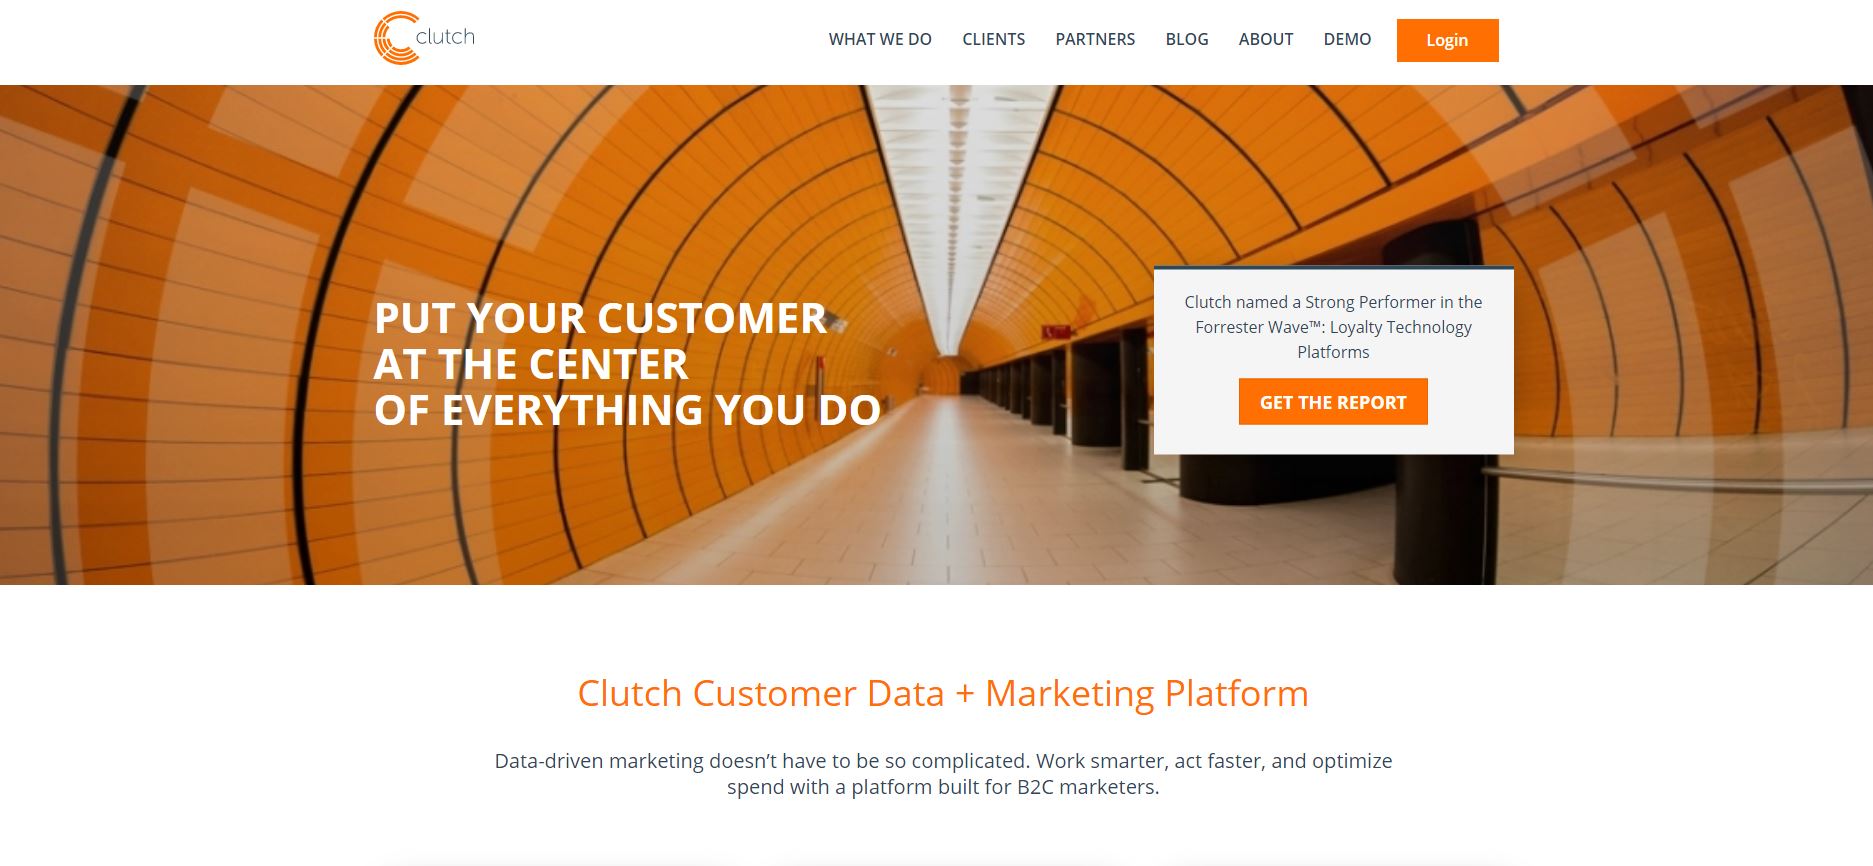 Clutch homepage